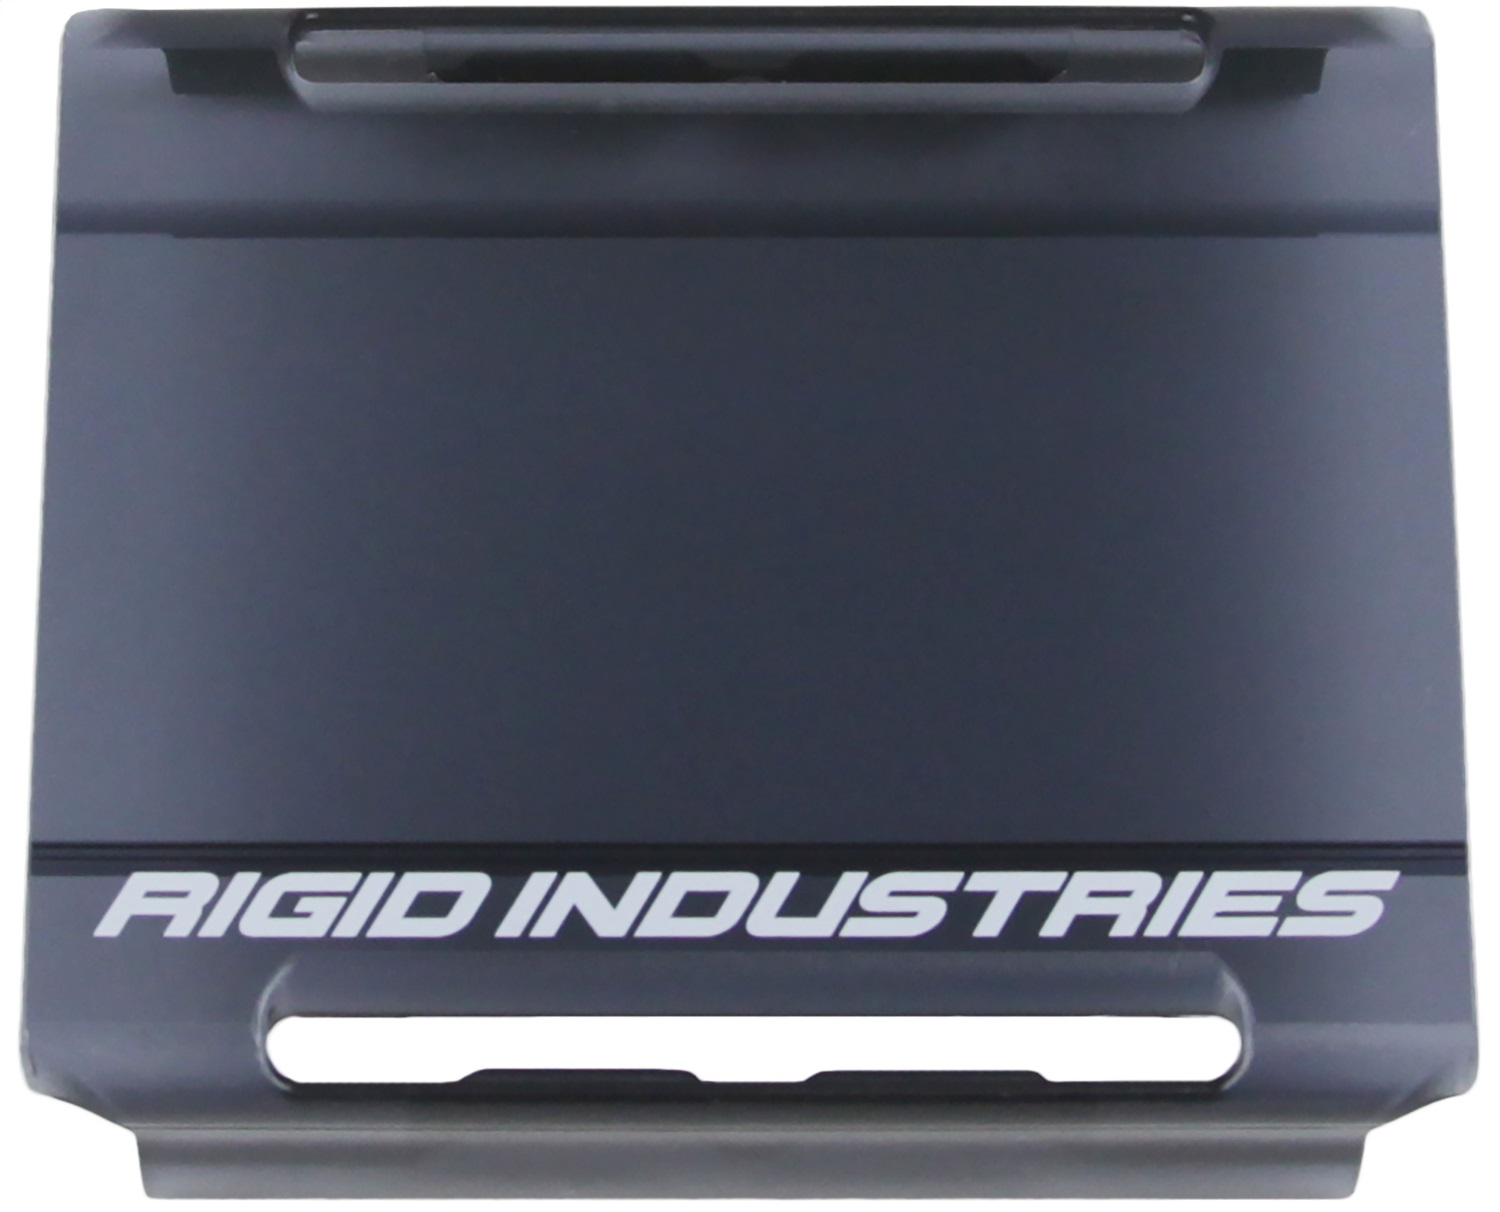 Rigid Industries Rigid Industries 10498 EM Series; Light Cover